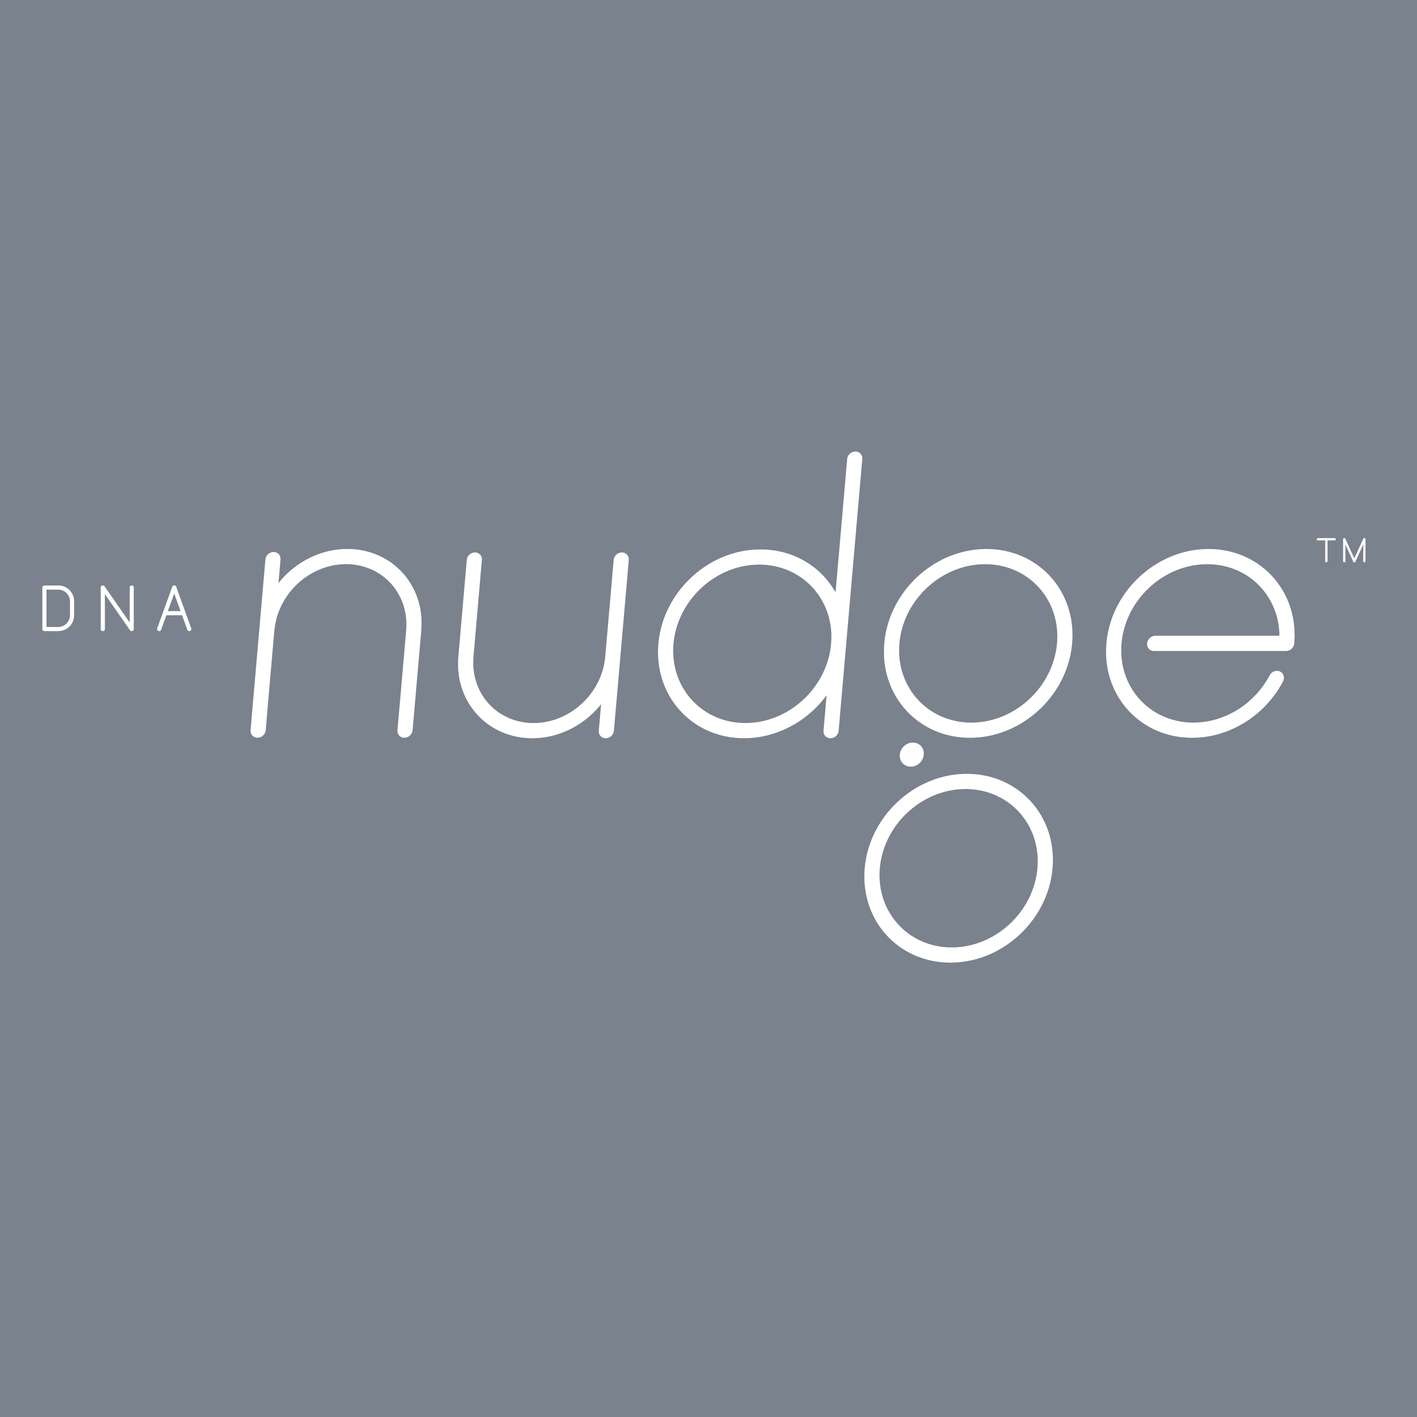 DnaNudge Ltd.